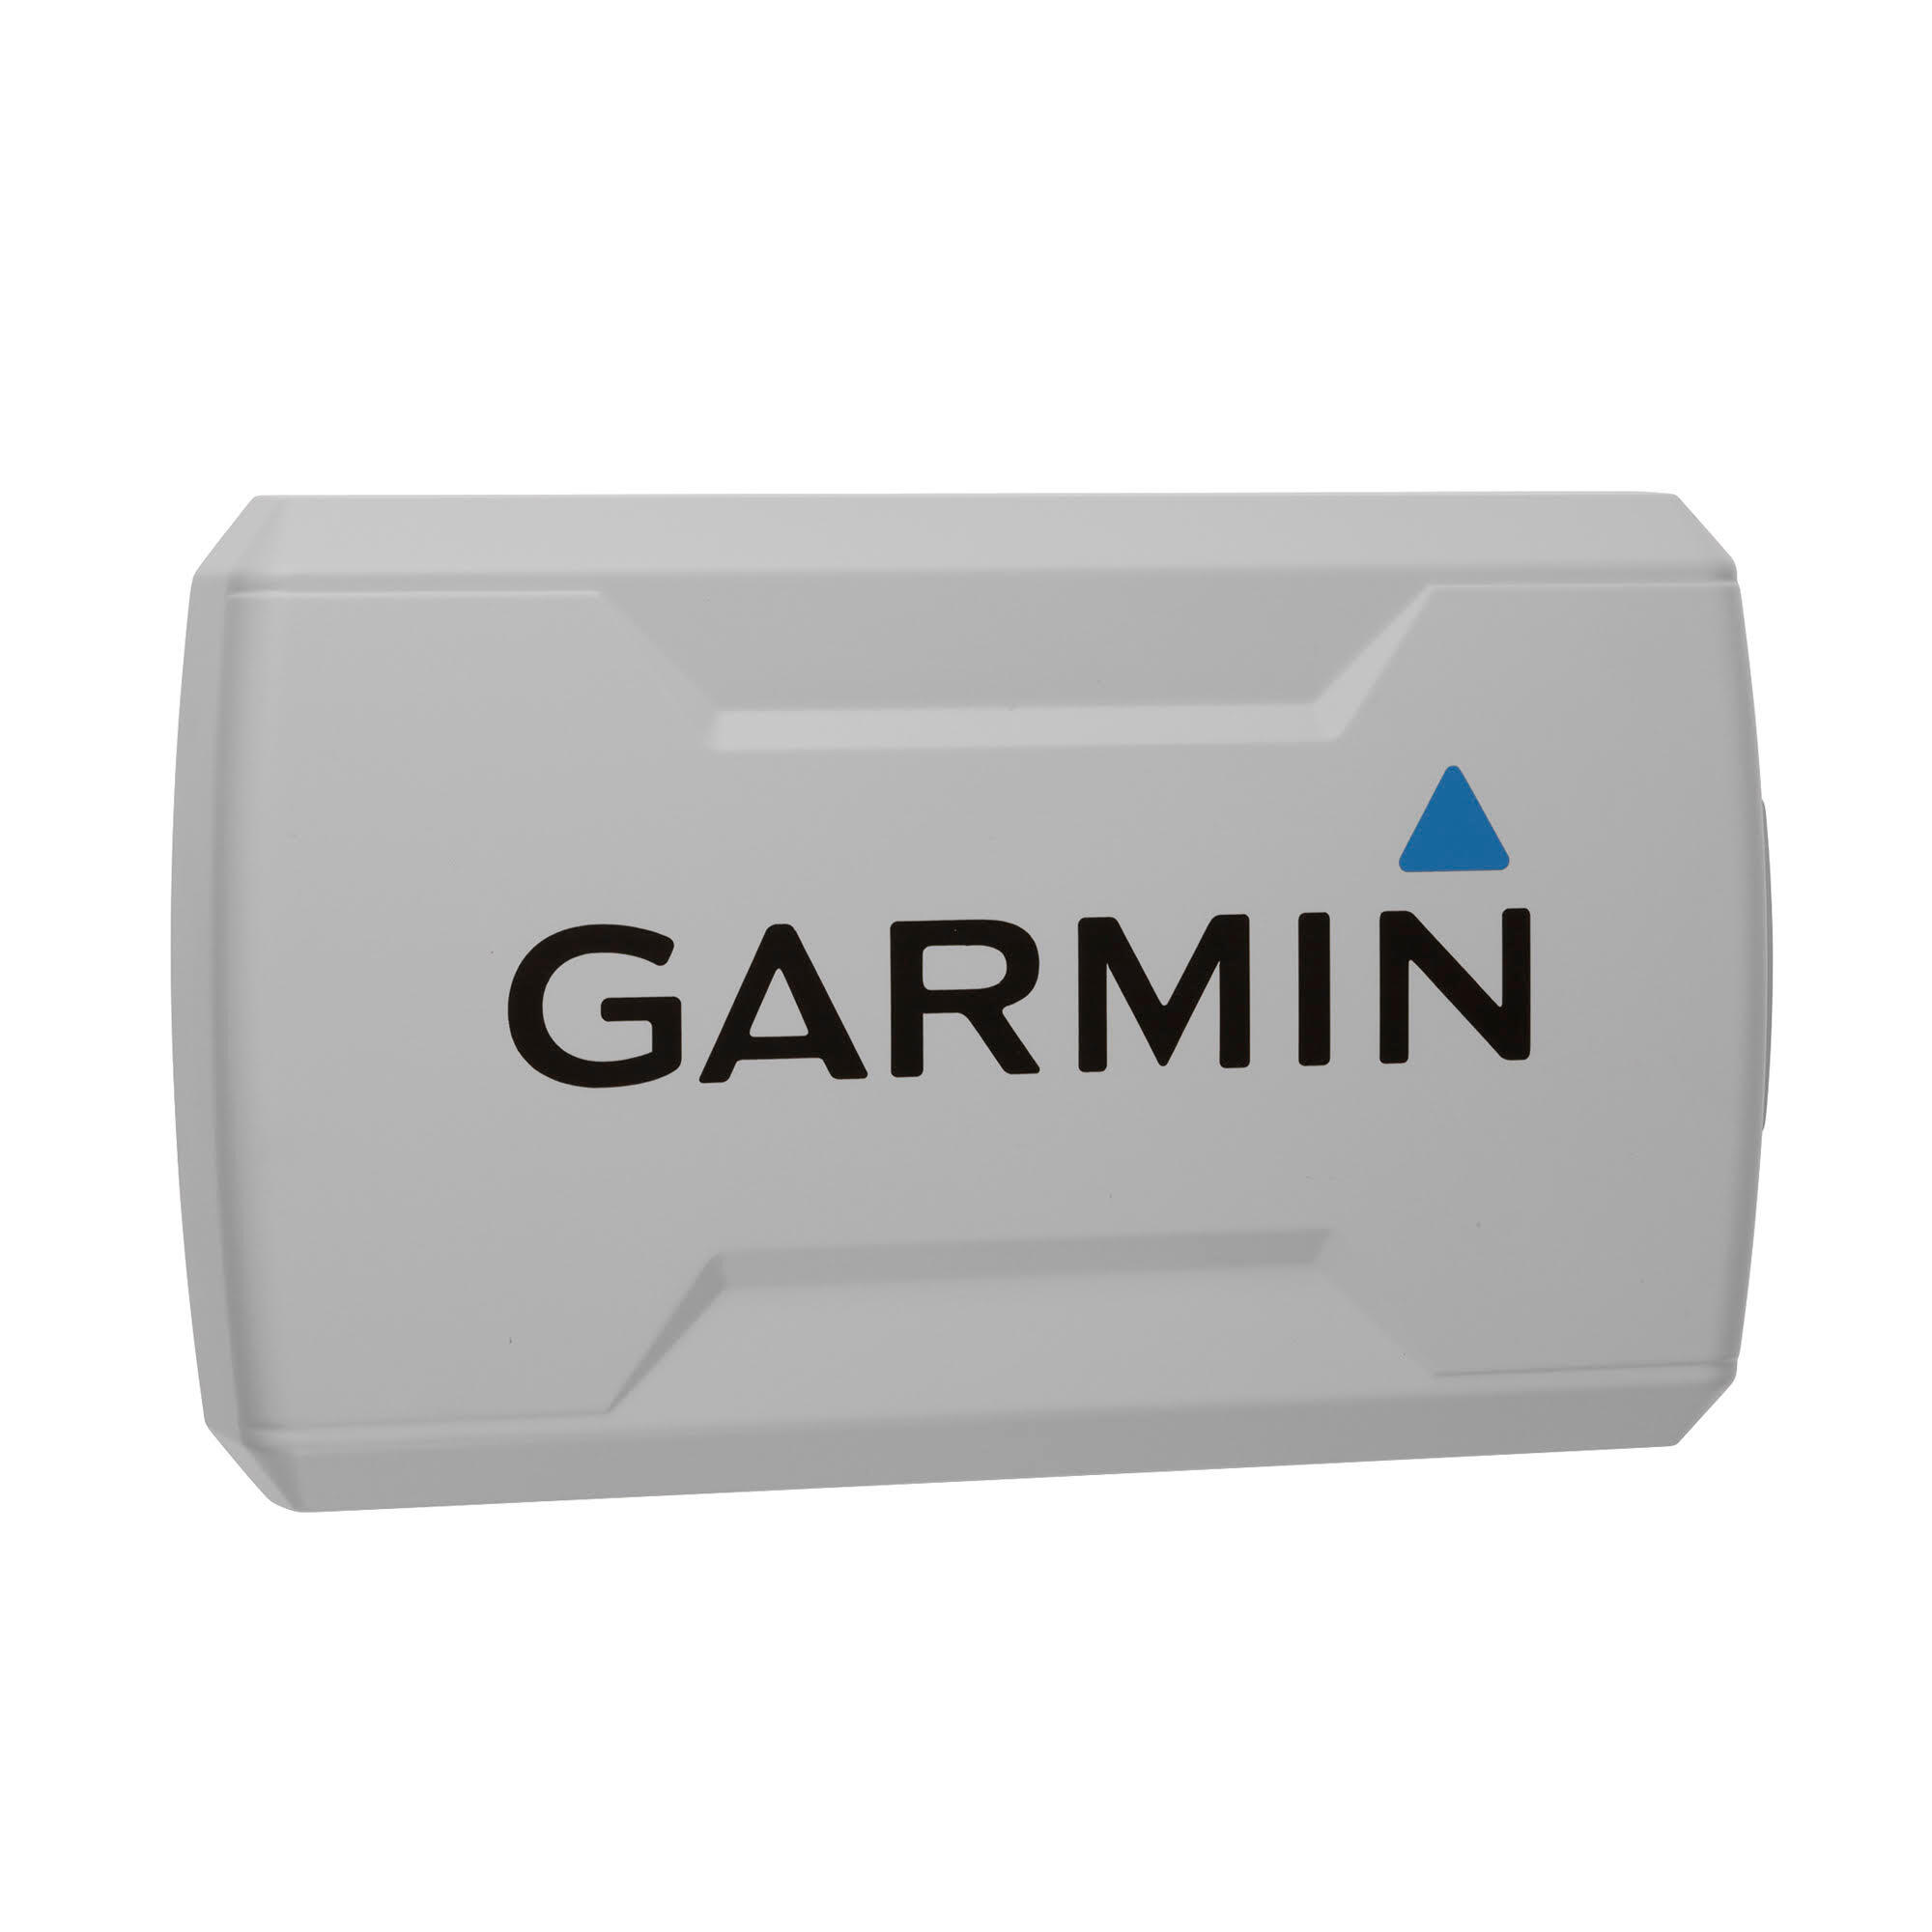 GARMIN Carp fishing protective cover for Garmin Striker 5 plus sonar